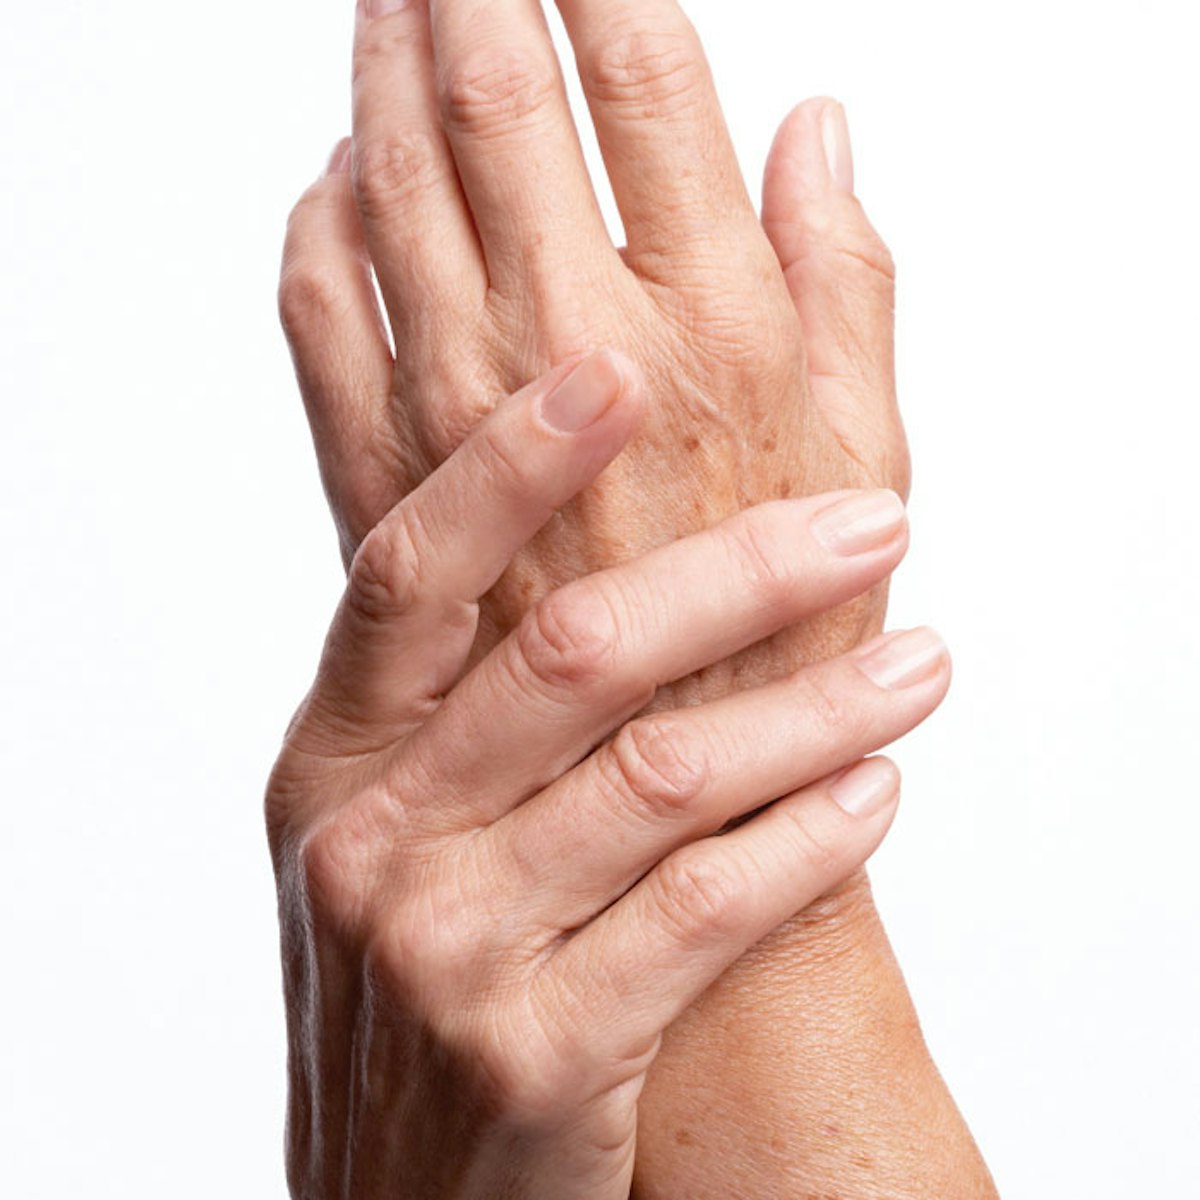 Hand Tools You Can Use If You Have Rheumatoid Arthritis